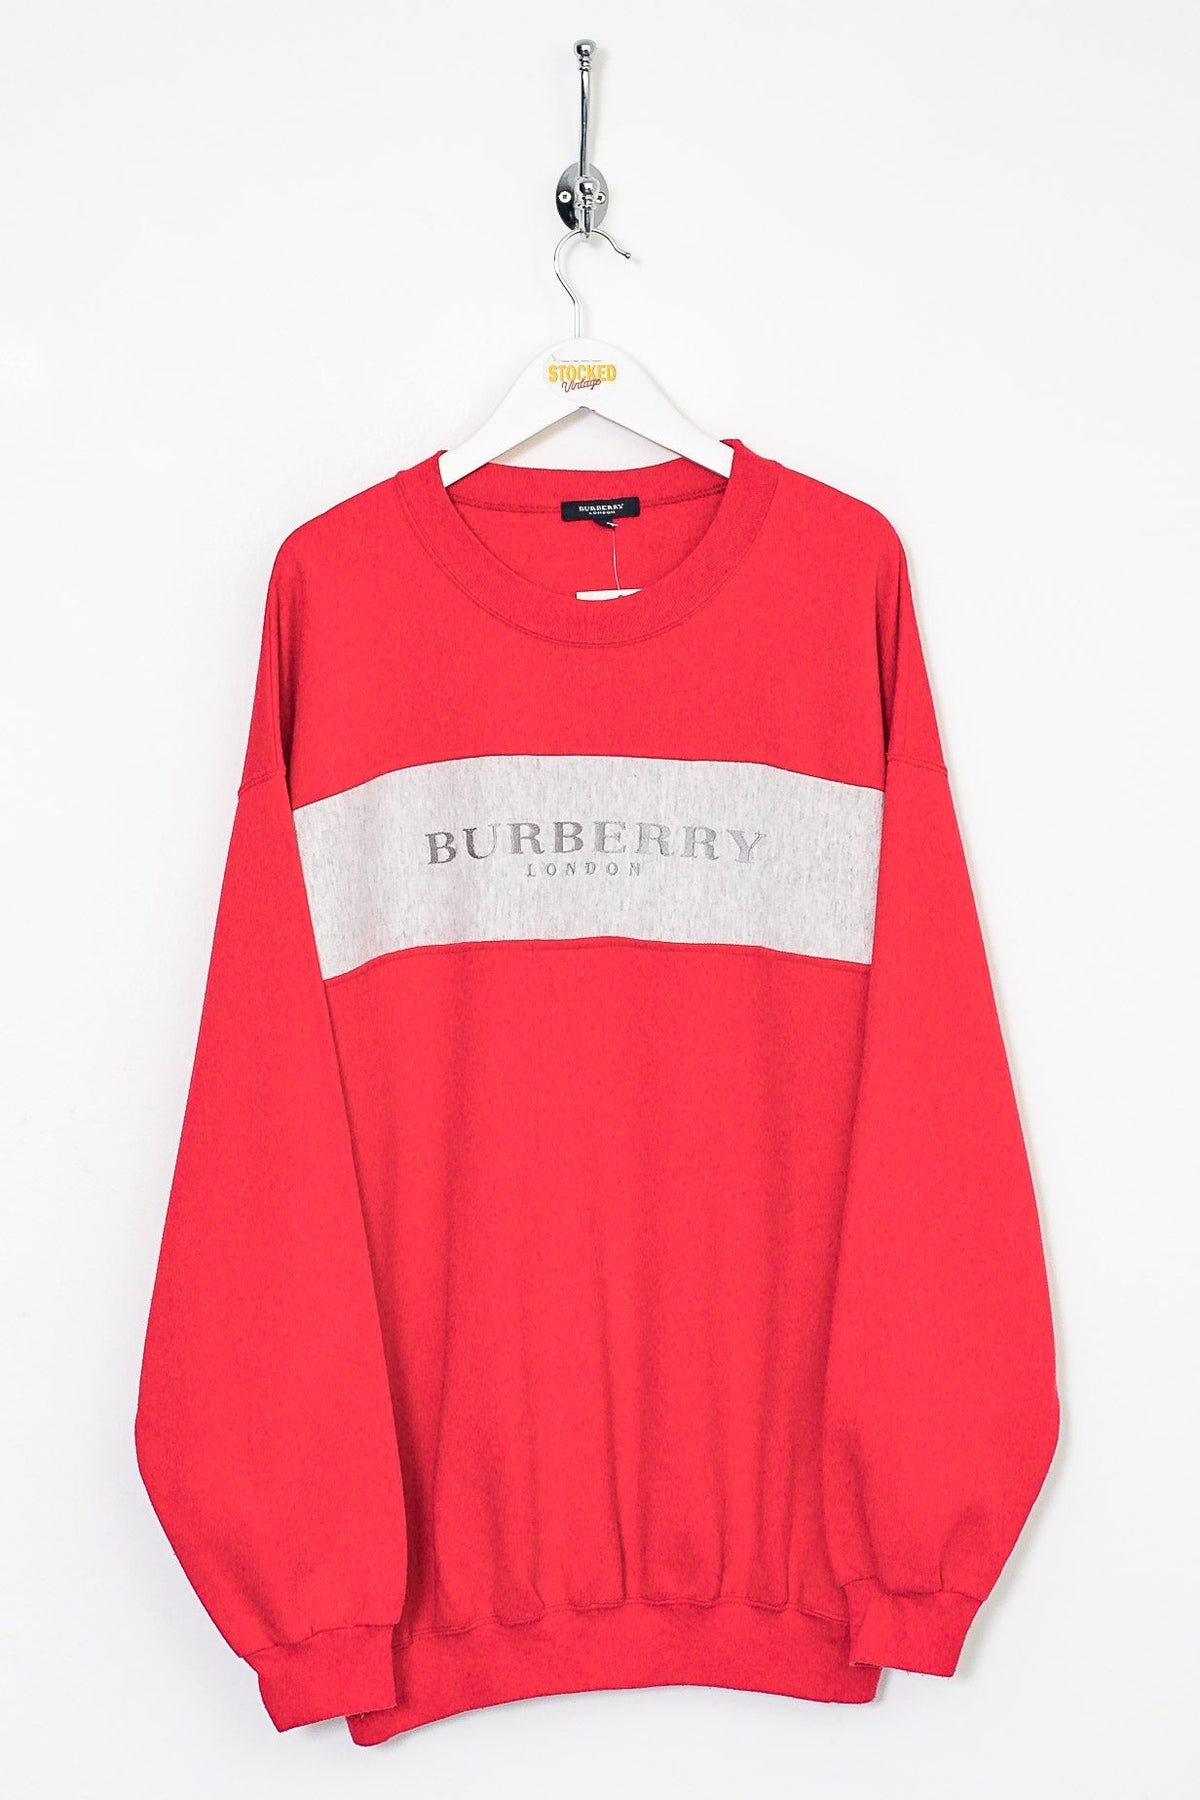 90s Burberry Sweatshirt (XL)